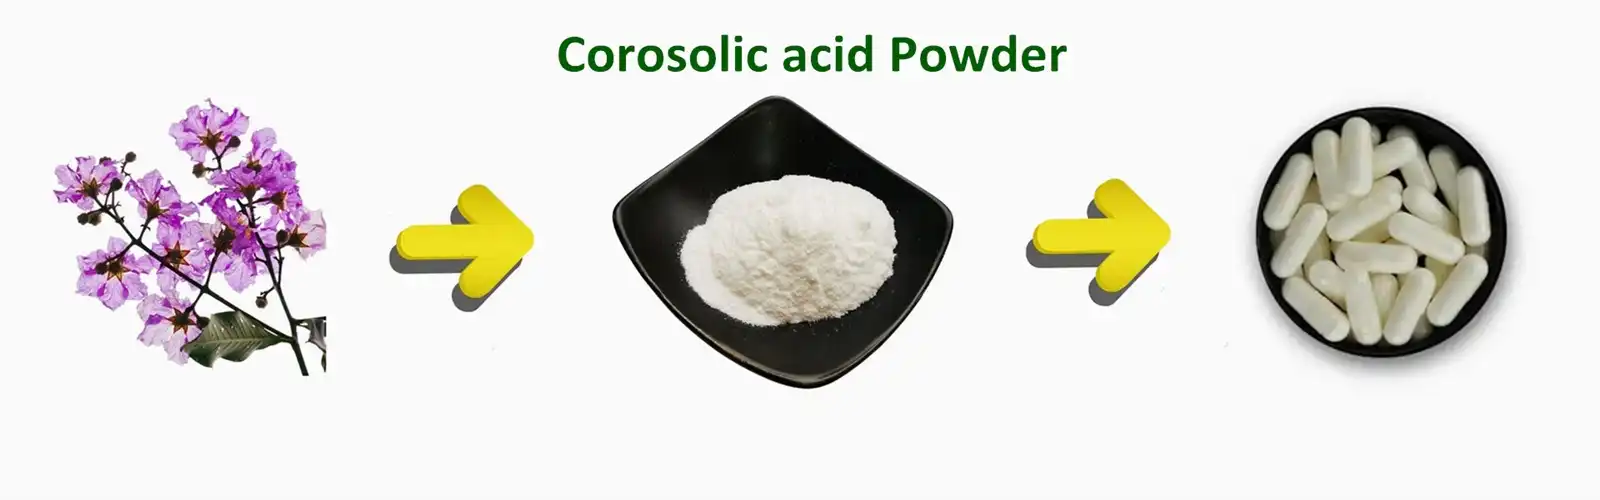 Corosoic acid Powder